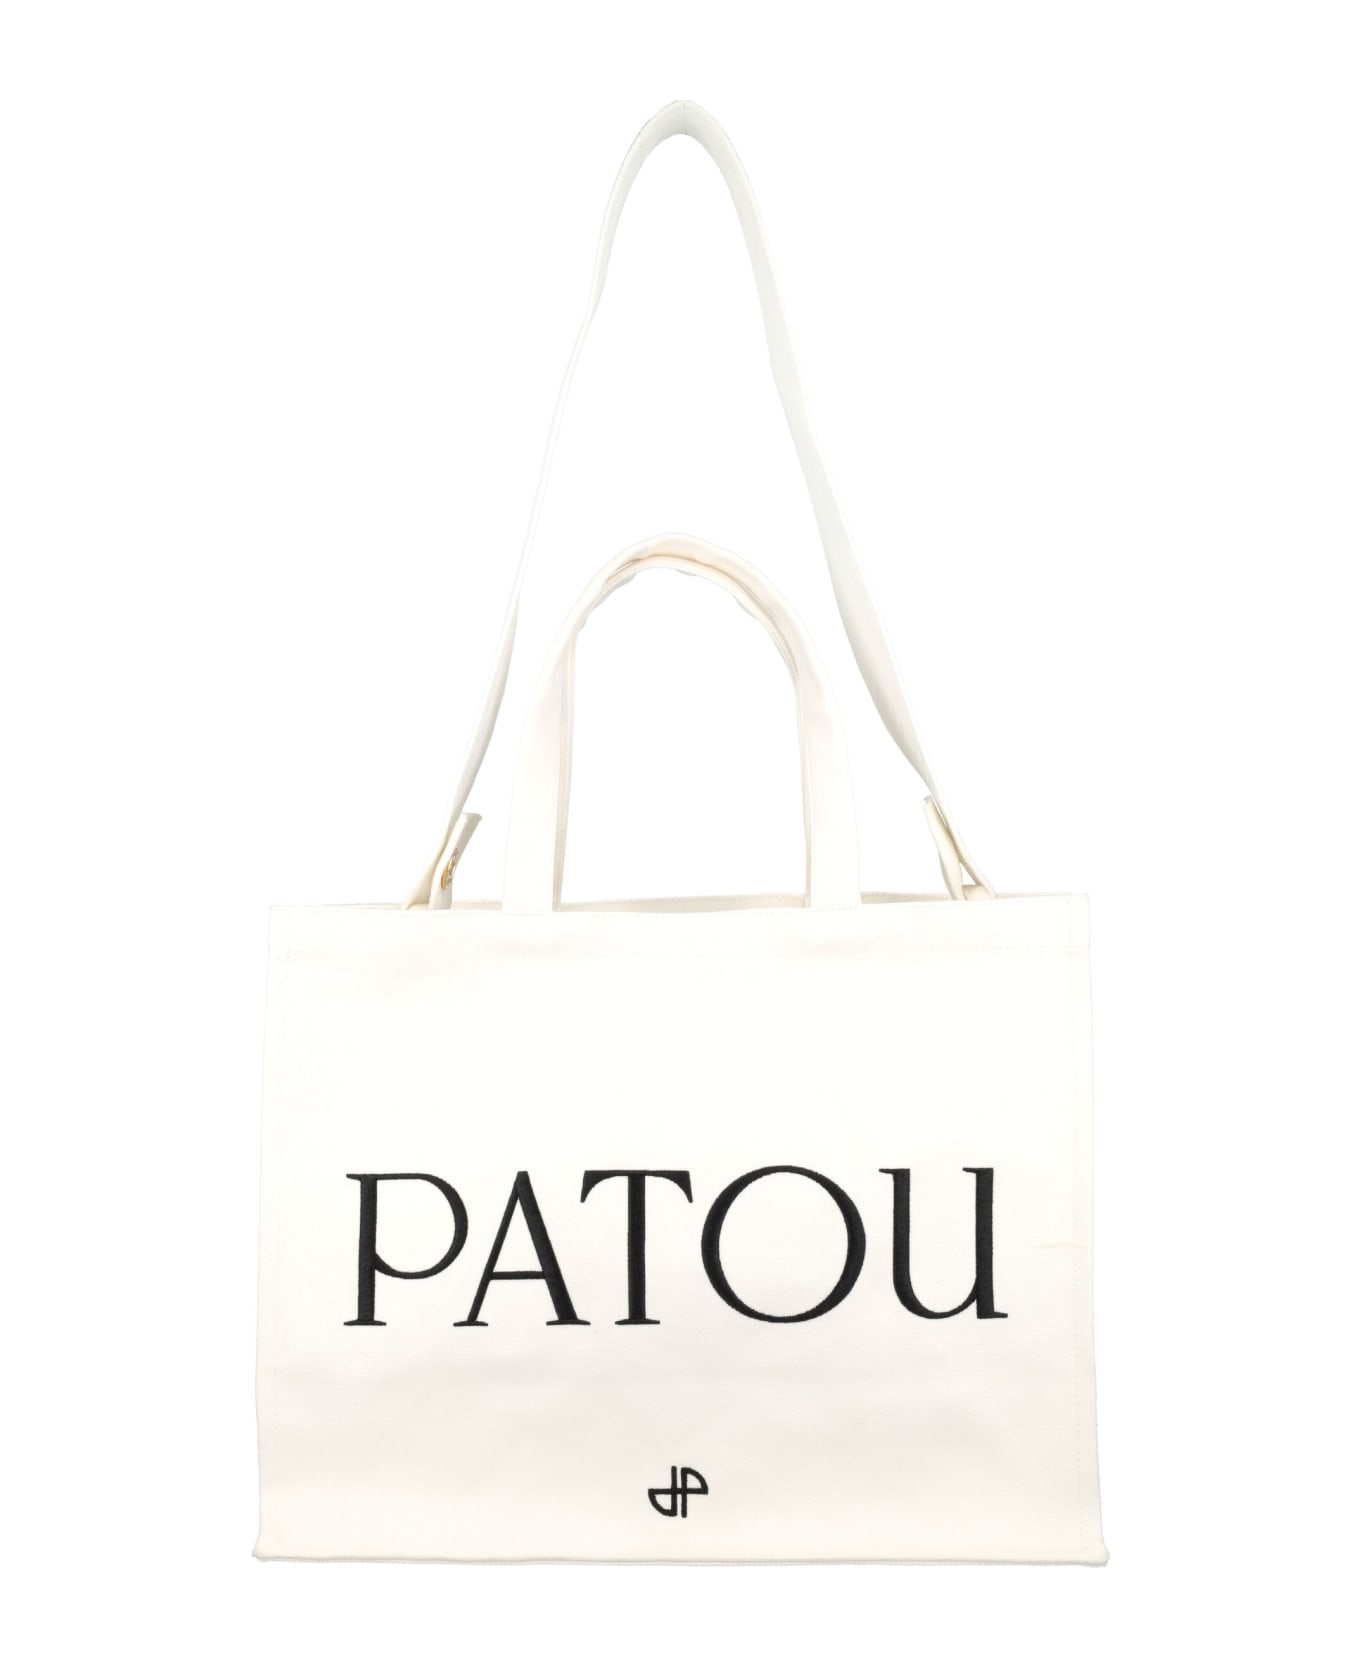 Patou Logo Tote - WHITE トートバッグ